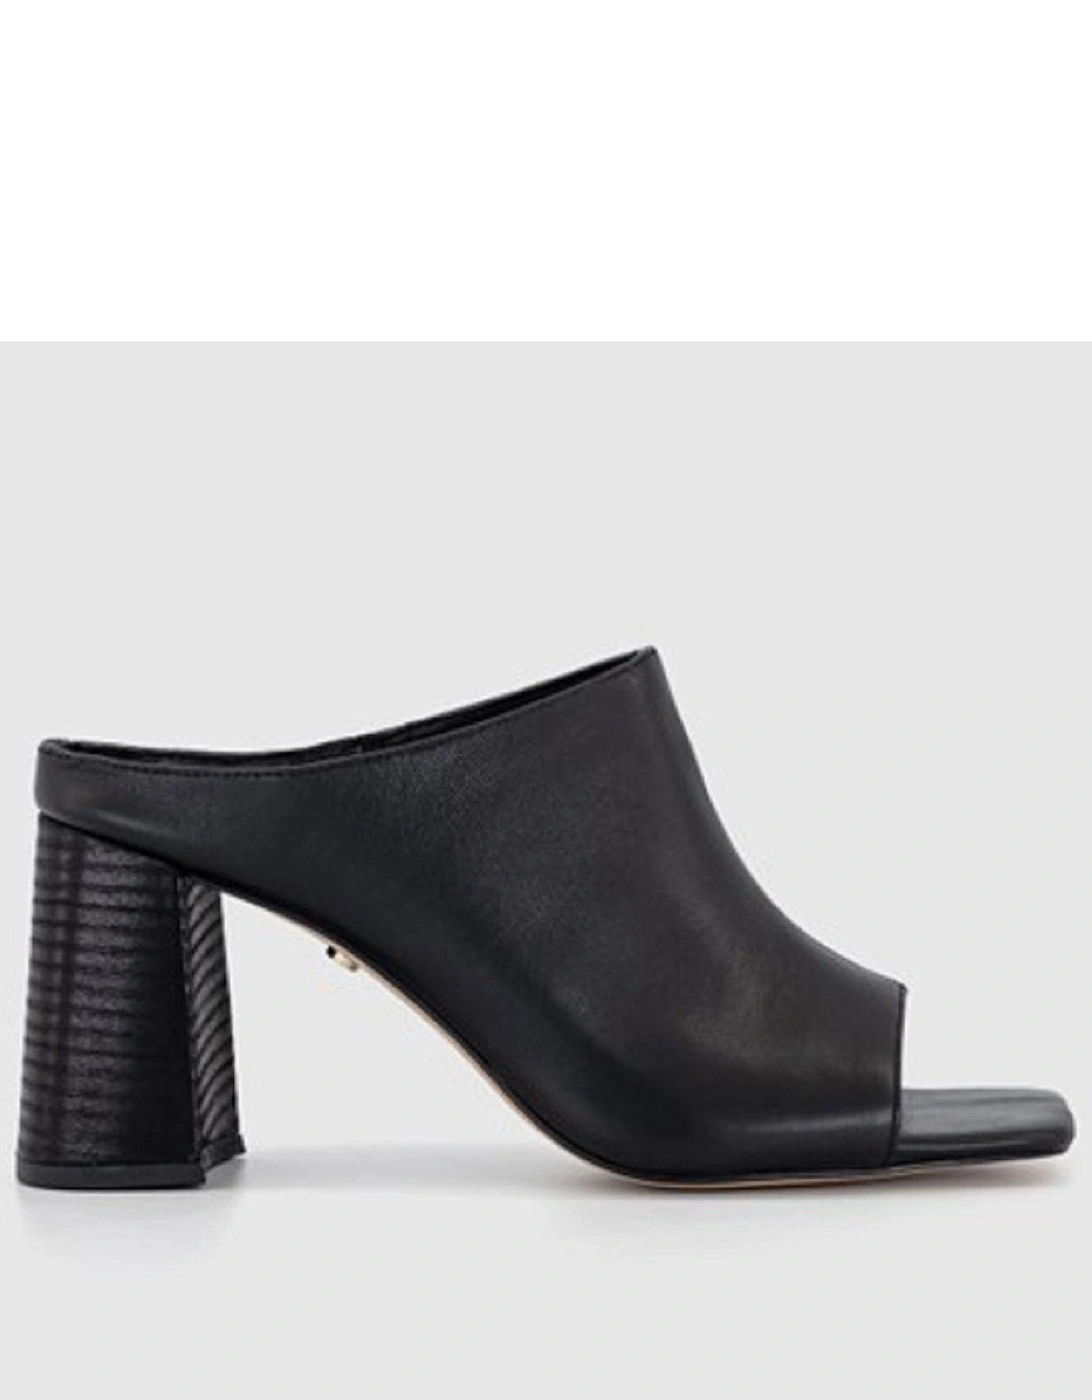 Marlowe Leather Mule Heeled Sandal - Black, 6 of 5